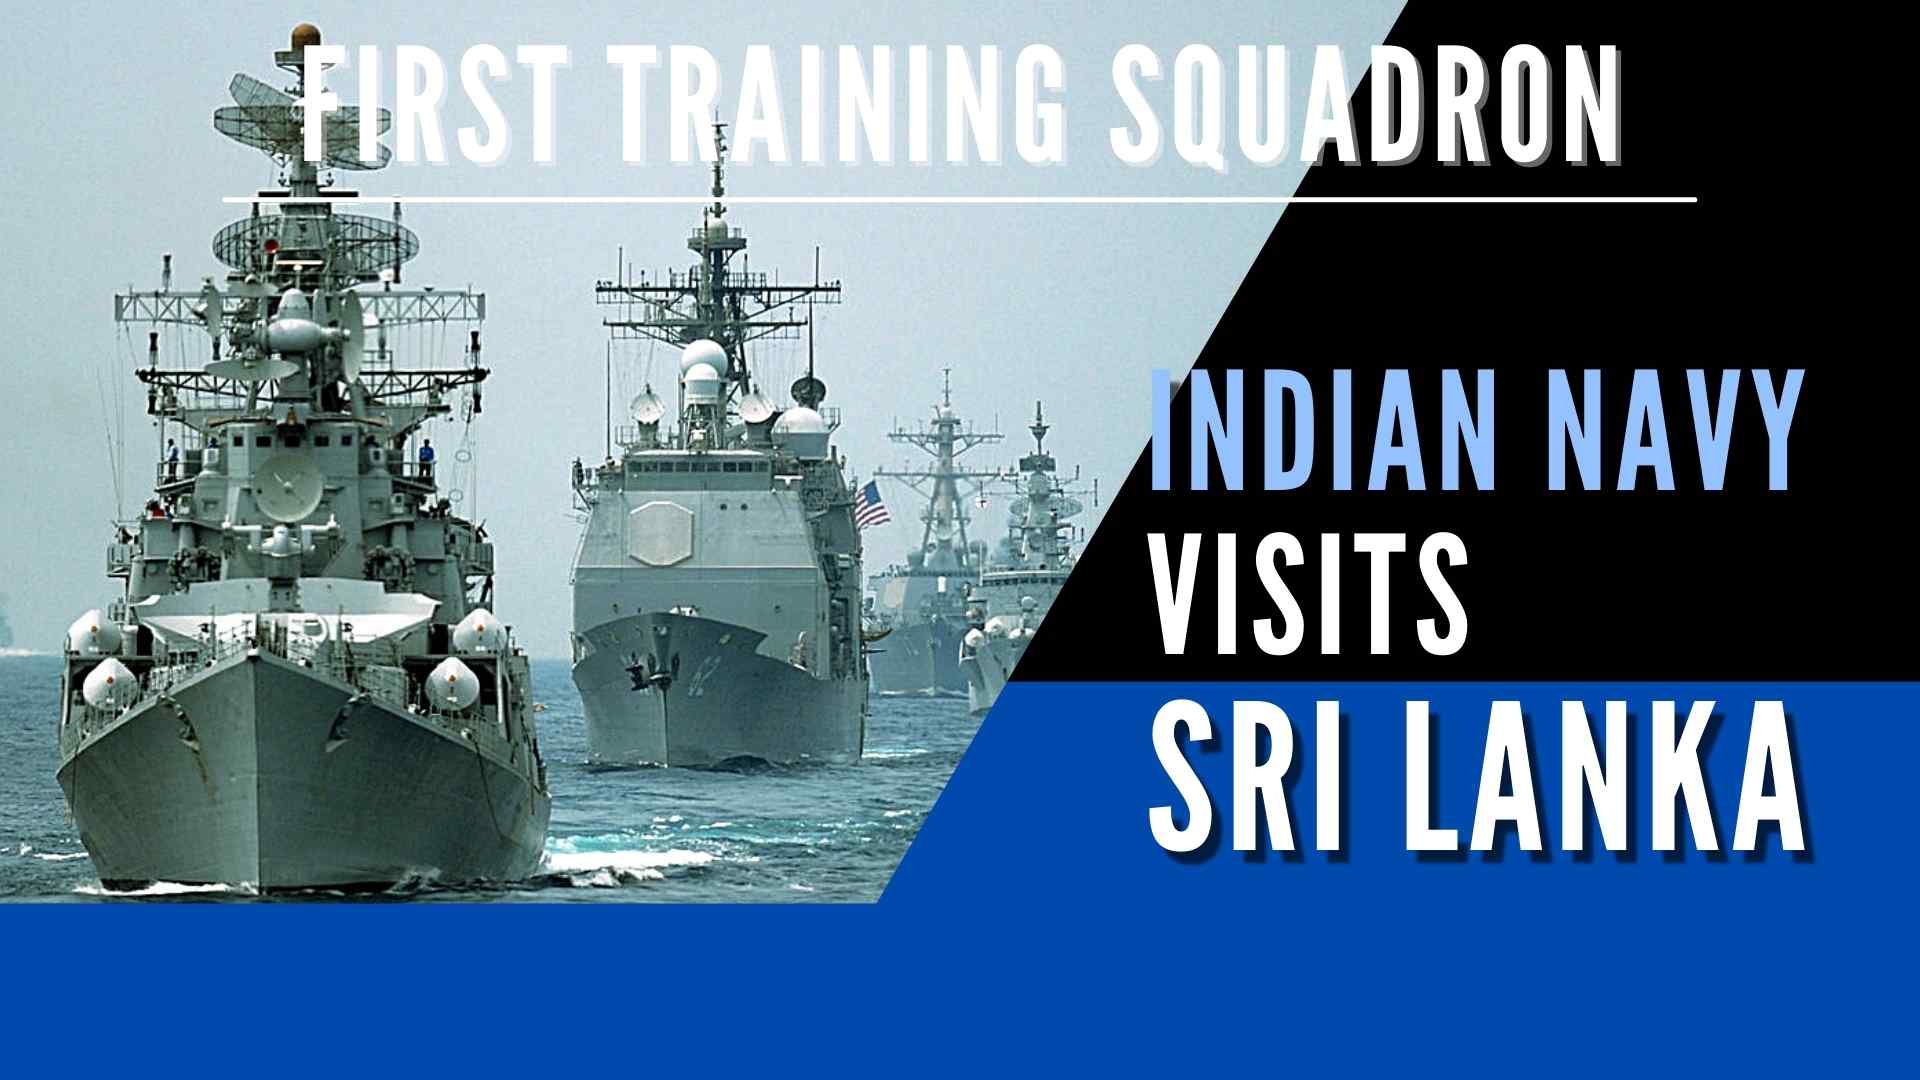 Indian Navy's First Training Squadron visits Sri Lanka - PGurus